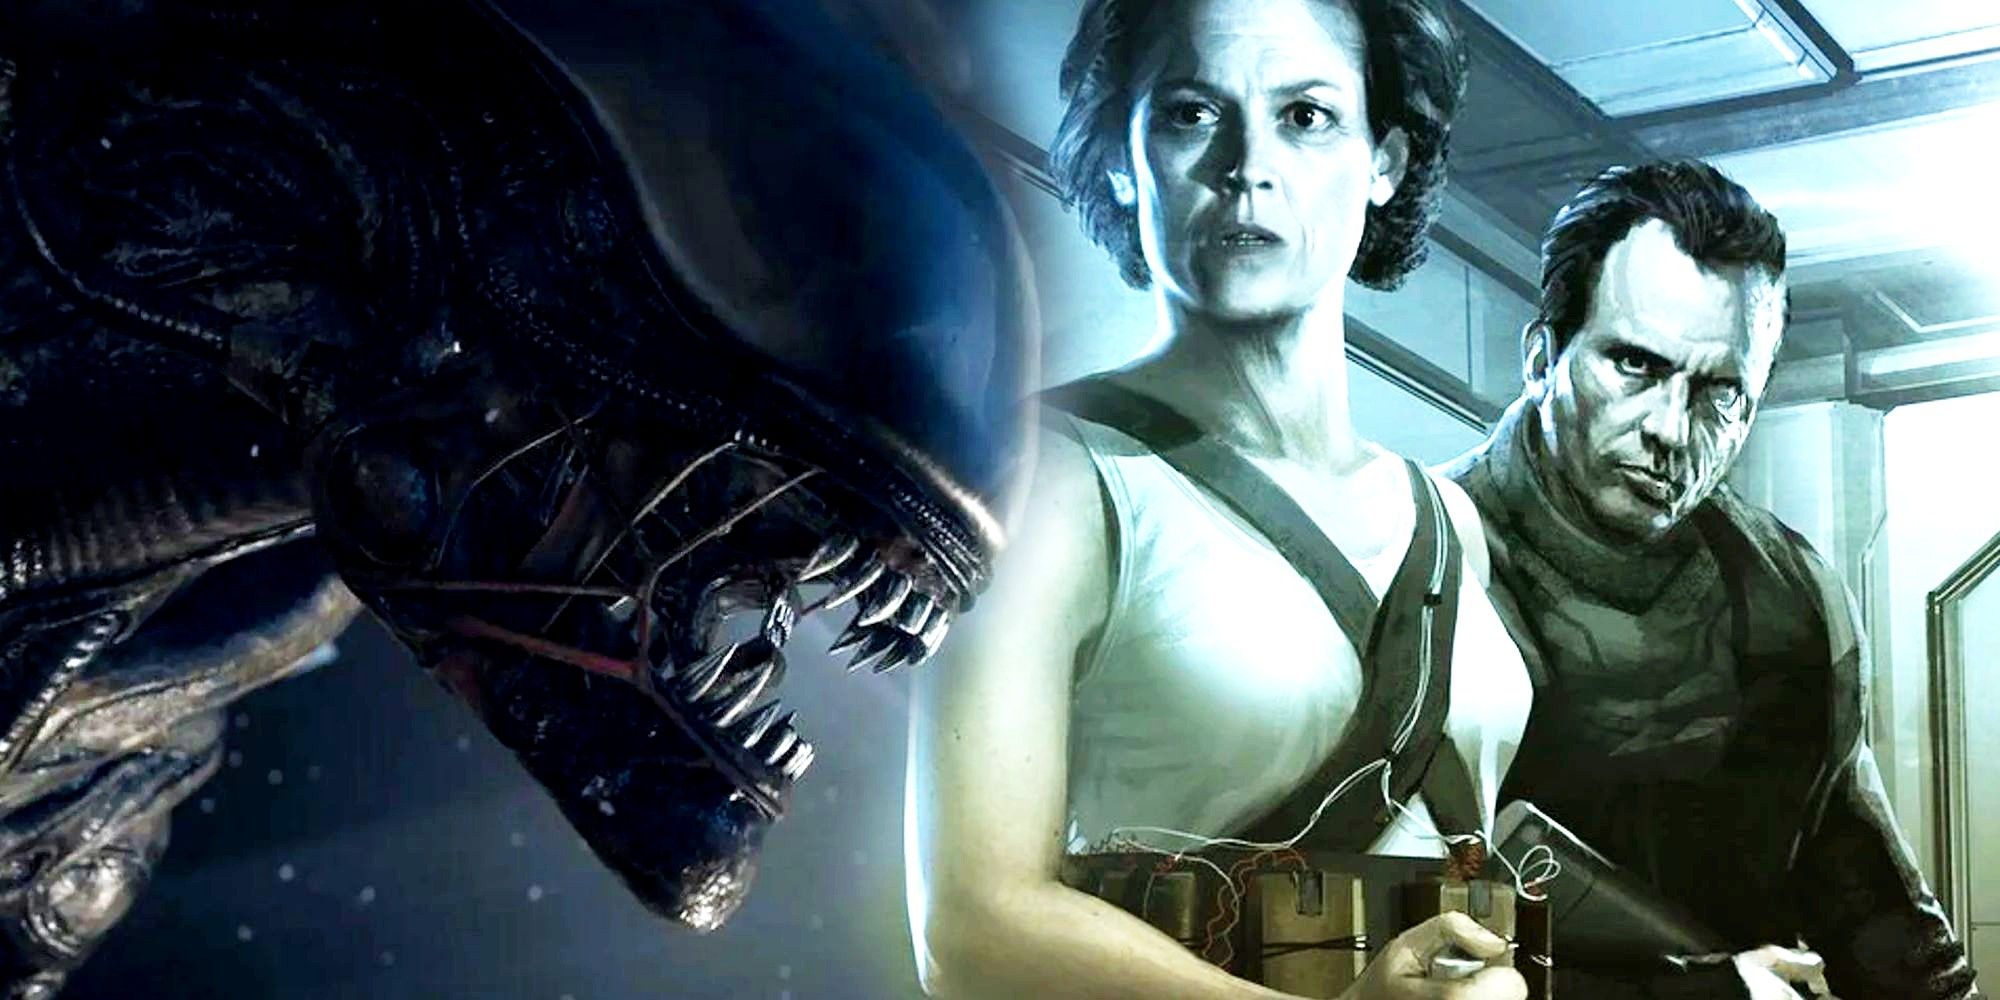 The Next Alien Movie Should Make Amanda Ripley The Main Character